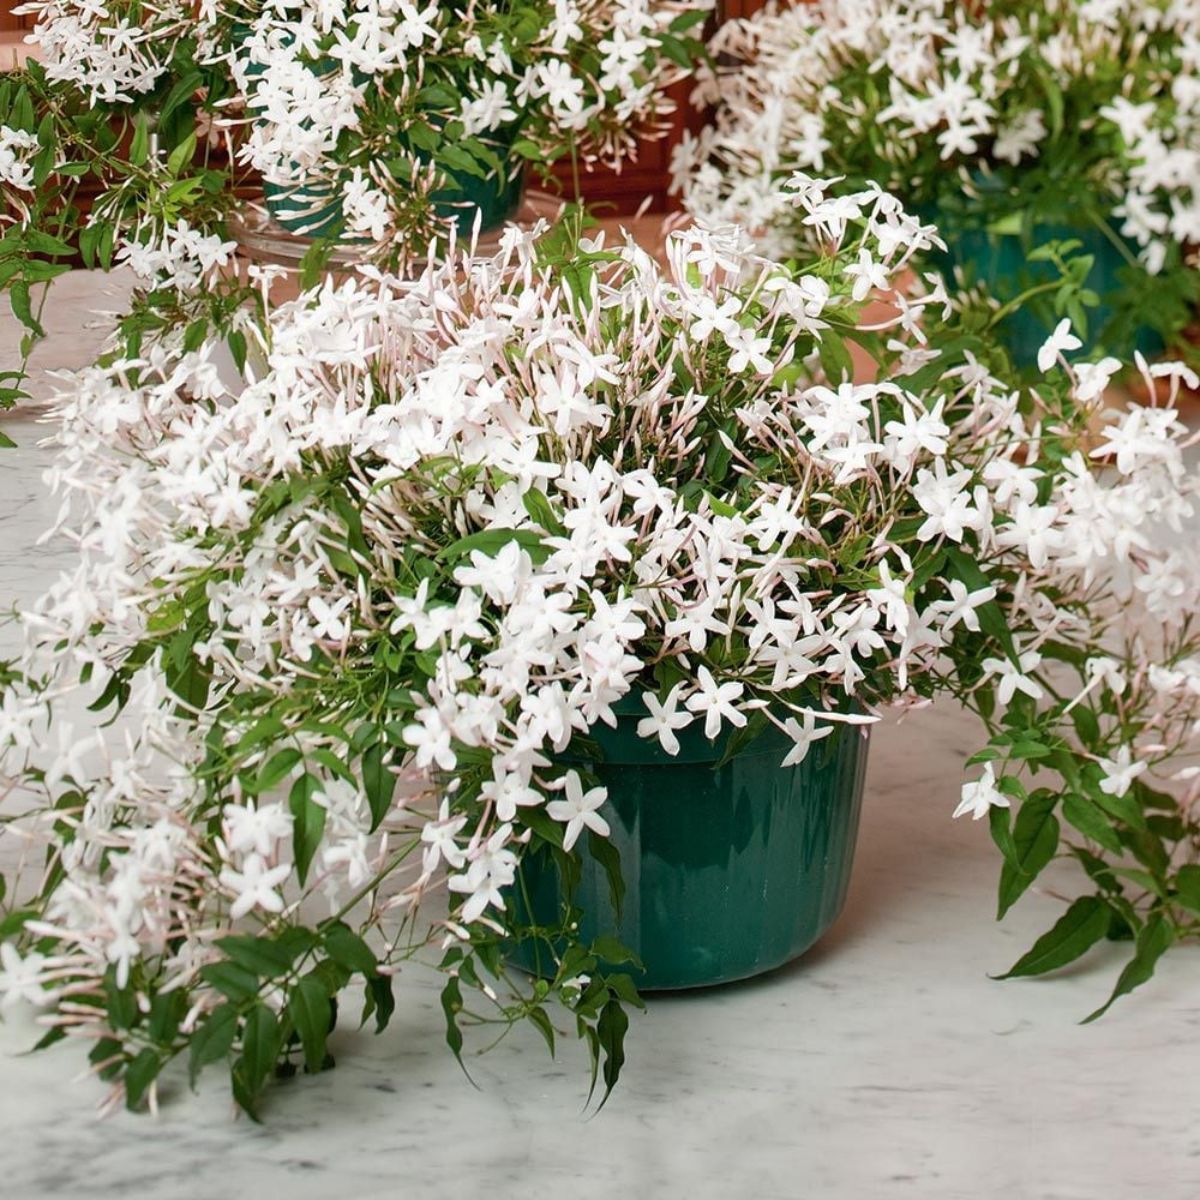 How to prune jasmine flowers on Thursd